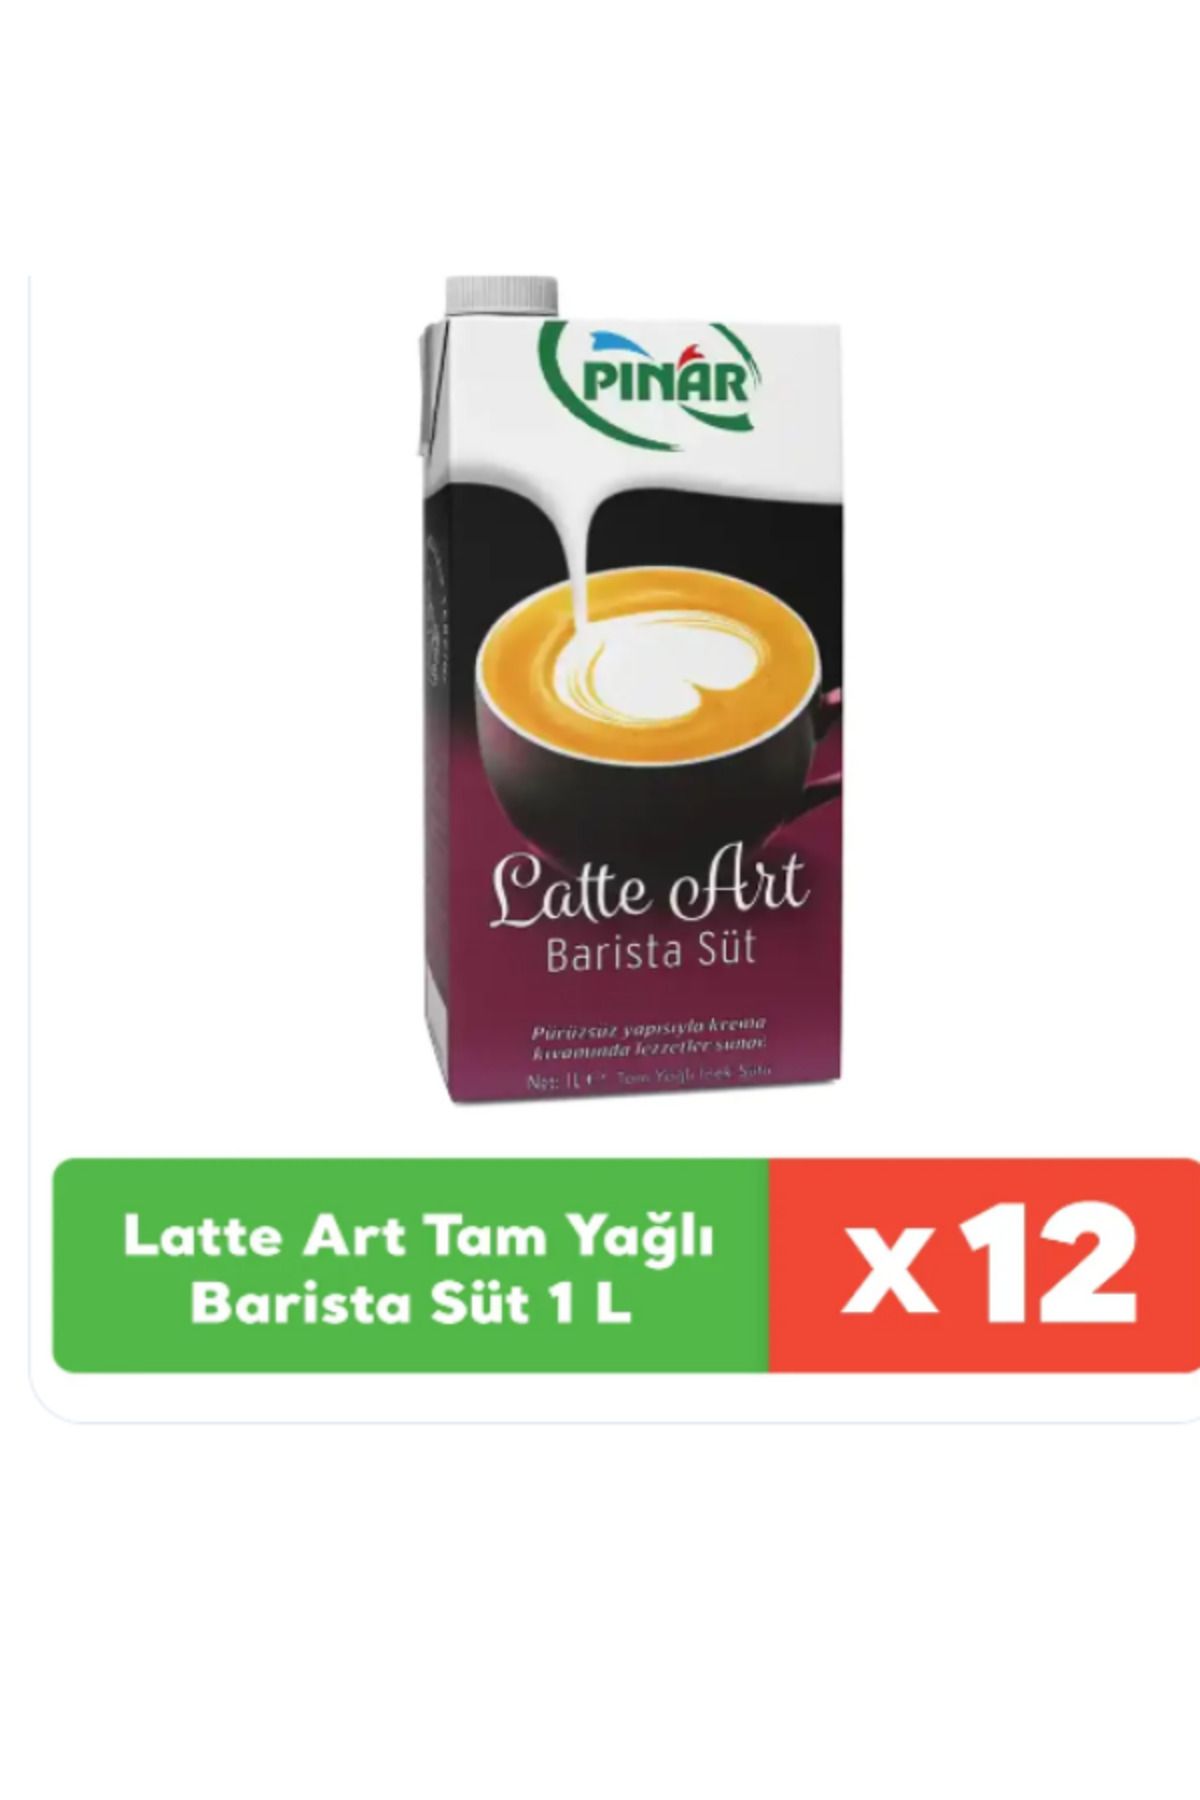 Pınar Latte Art Tam Yağlı Barista Süt 1 L x 12 adet